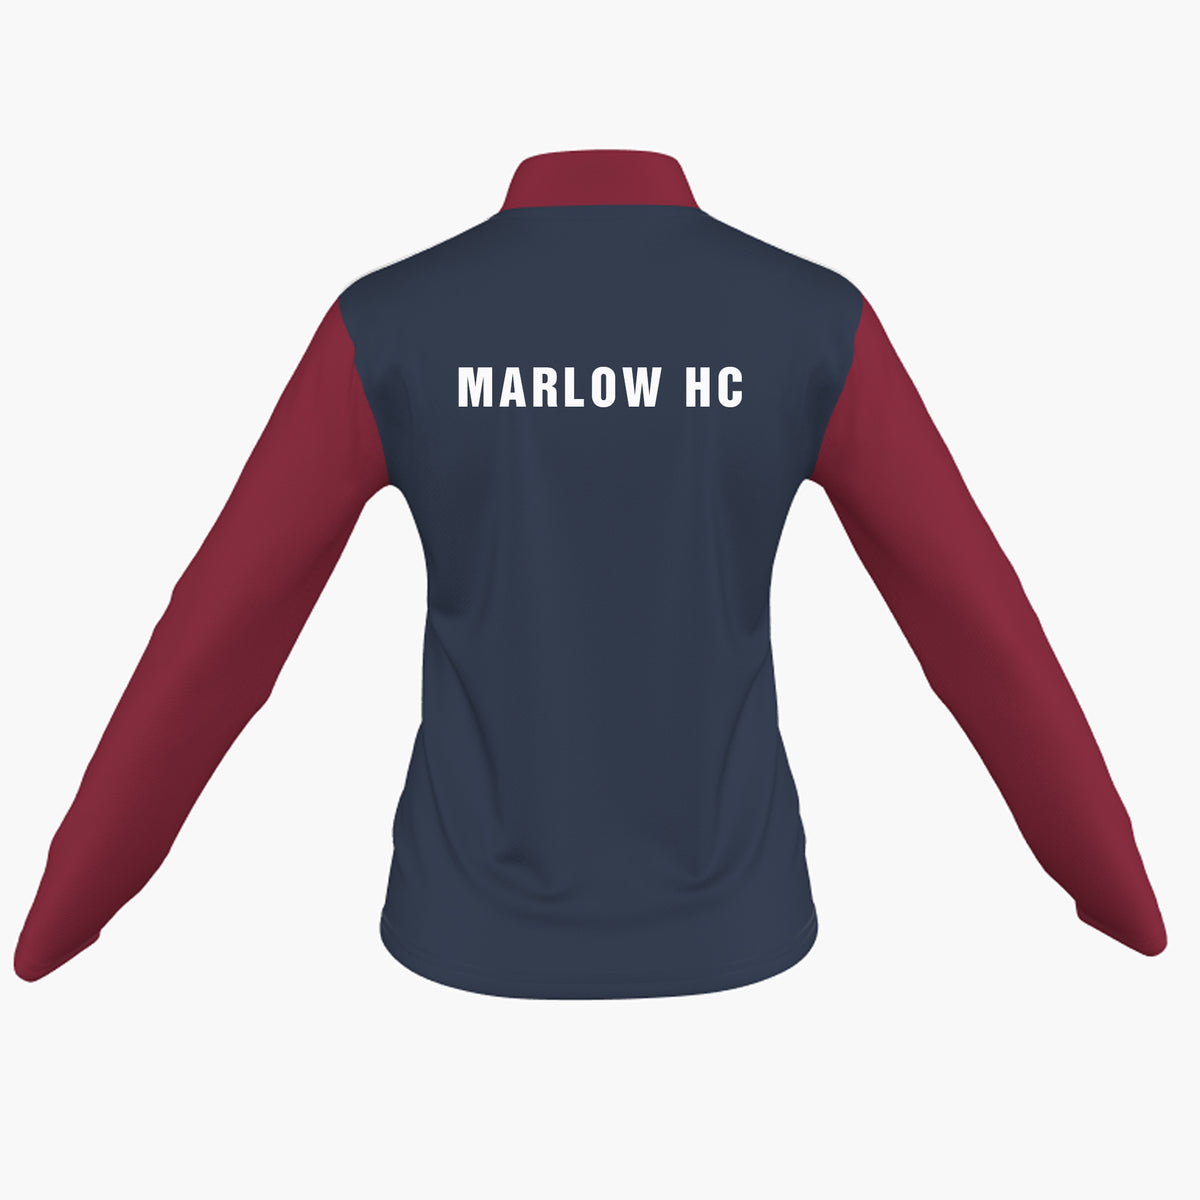 Marlow Hockey Club Women's Training Top